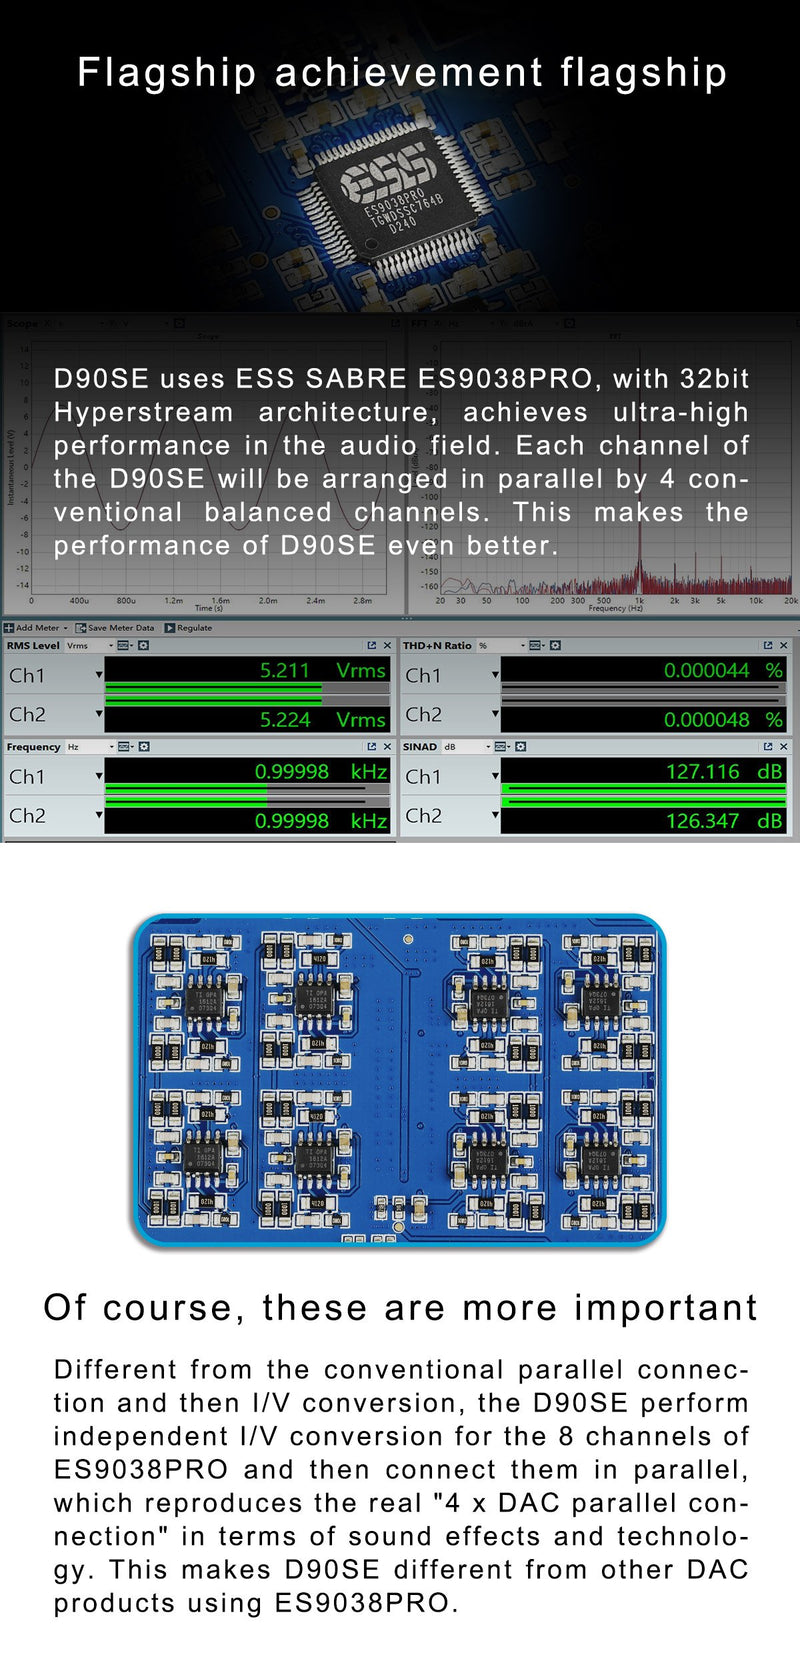 Apos Audio TOPPING DAC (Digital-to-Analog Converter) TOPPING D90SE DAC (Apos Certified)